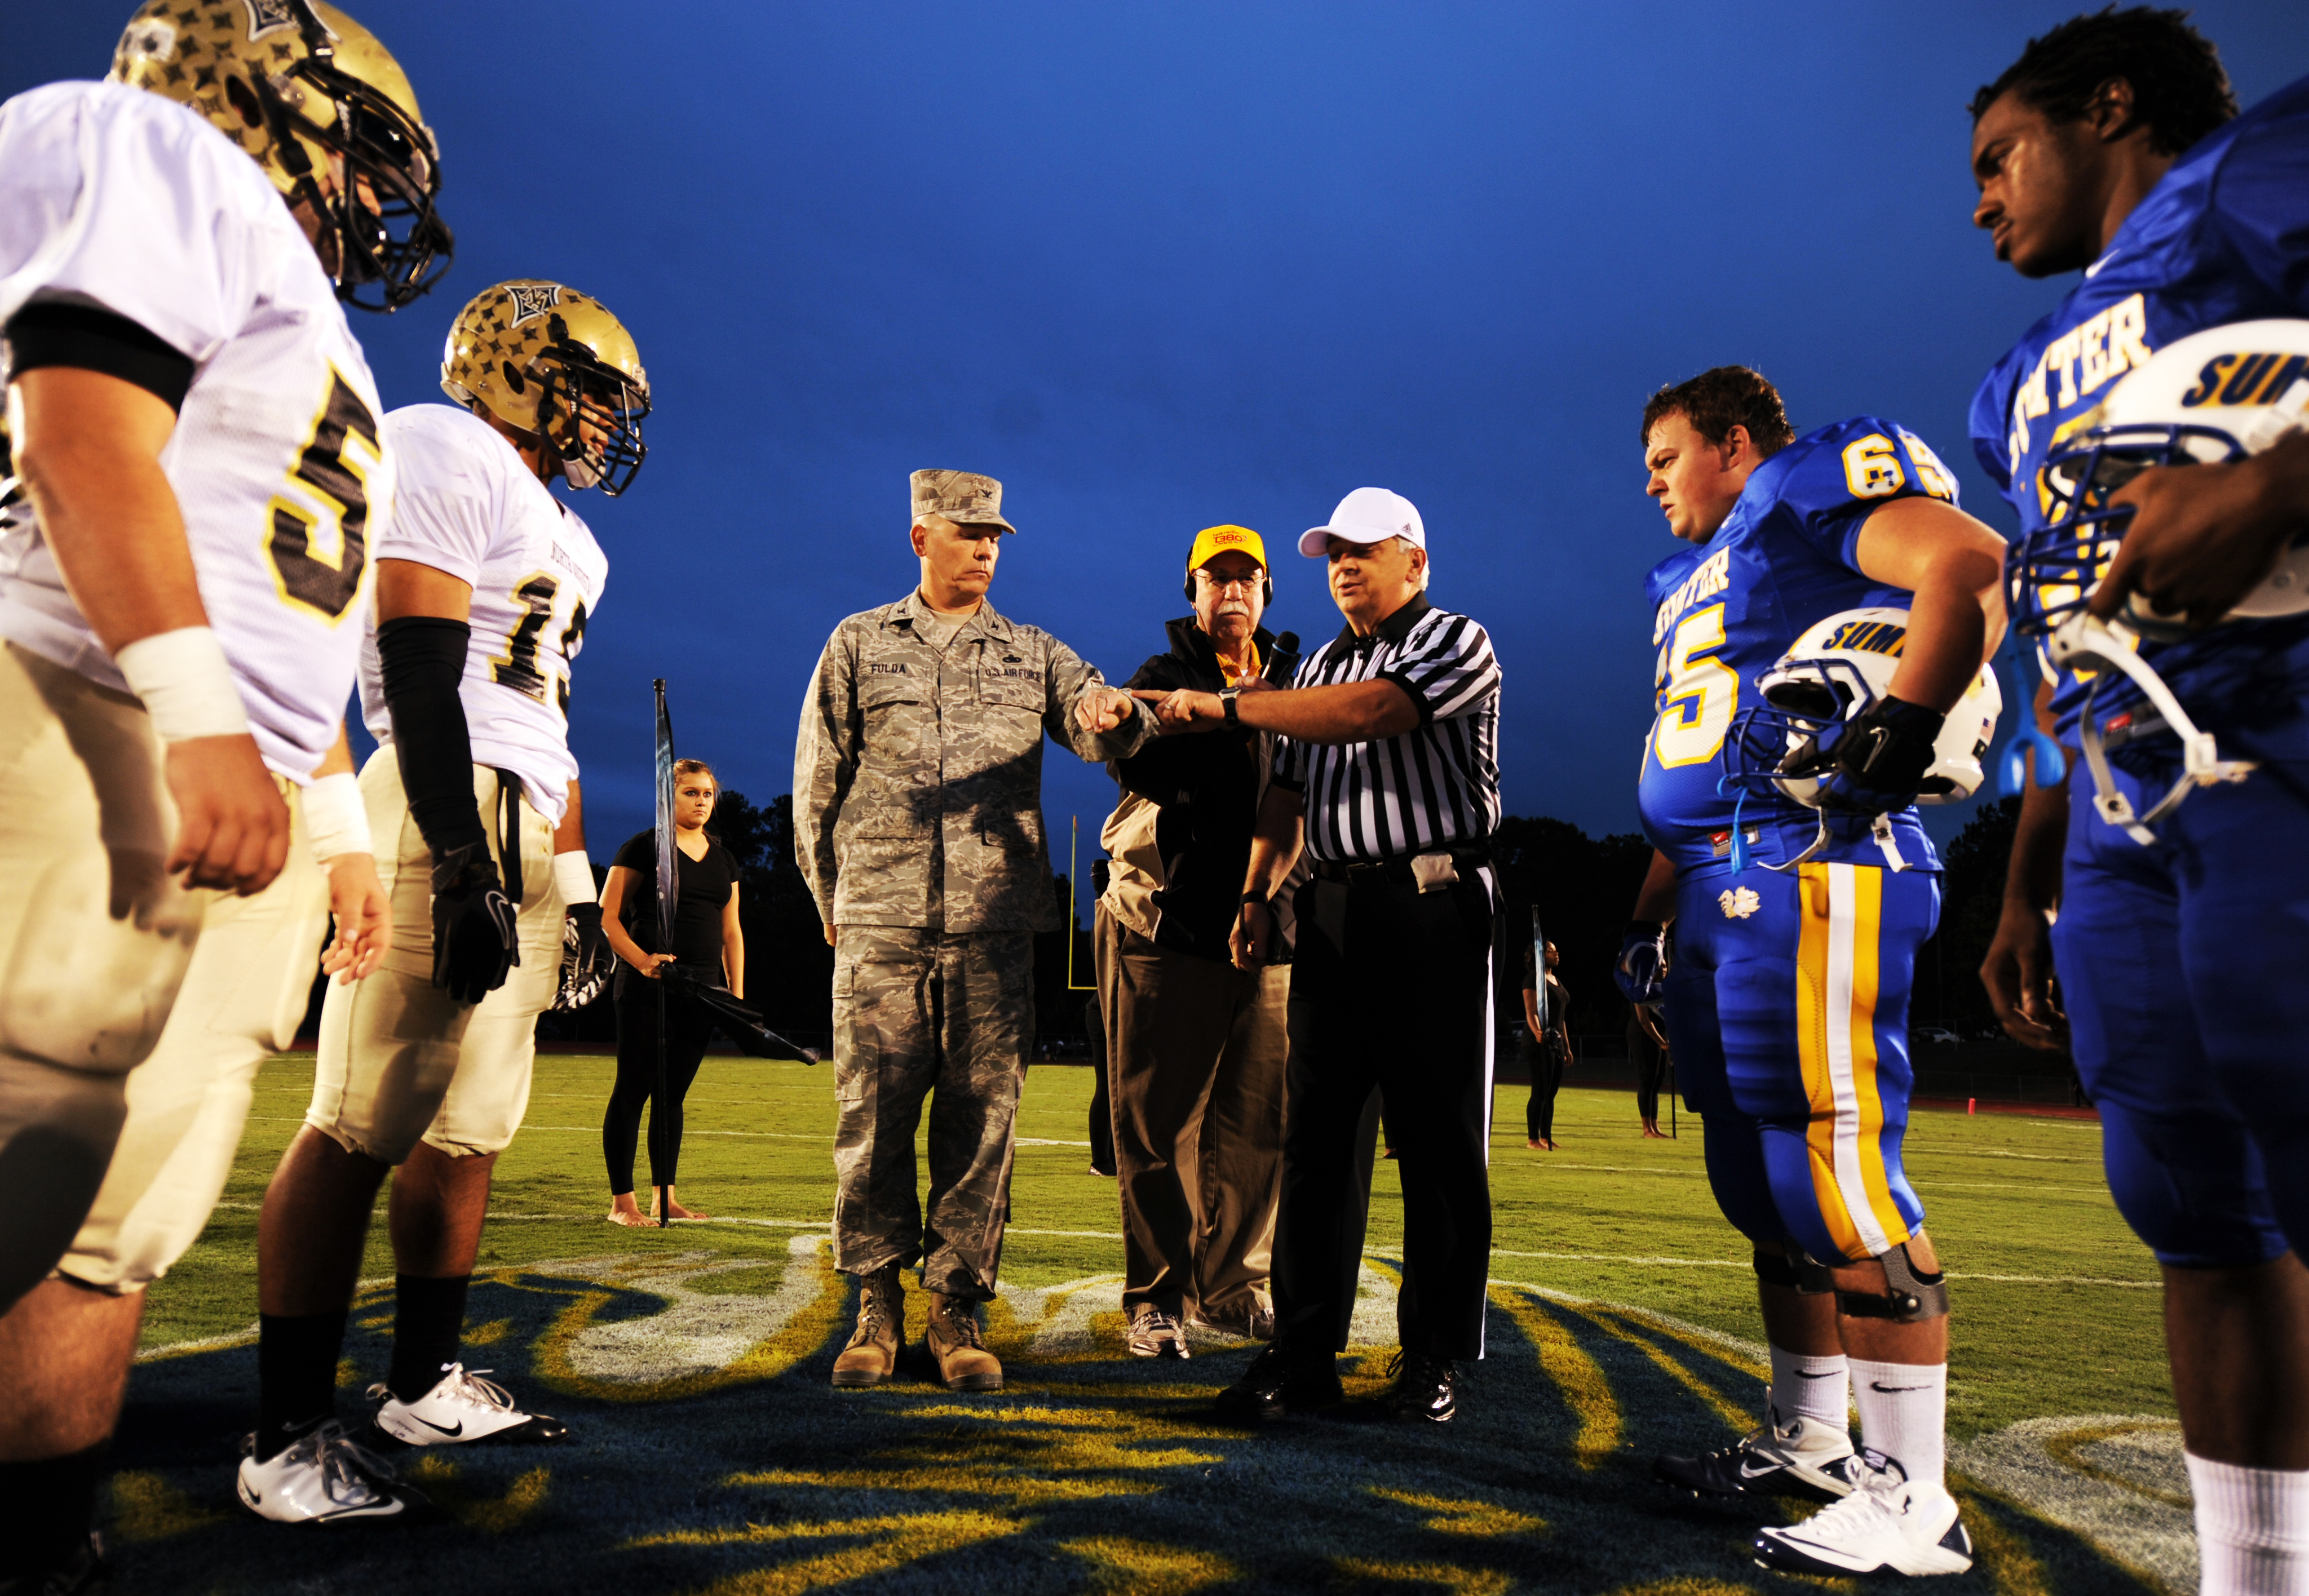 Sumter High School Military Appreciation Night Football Game4096 x 2832